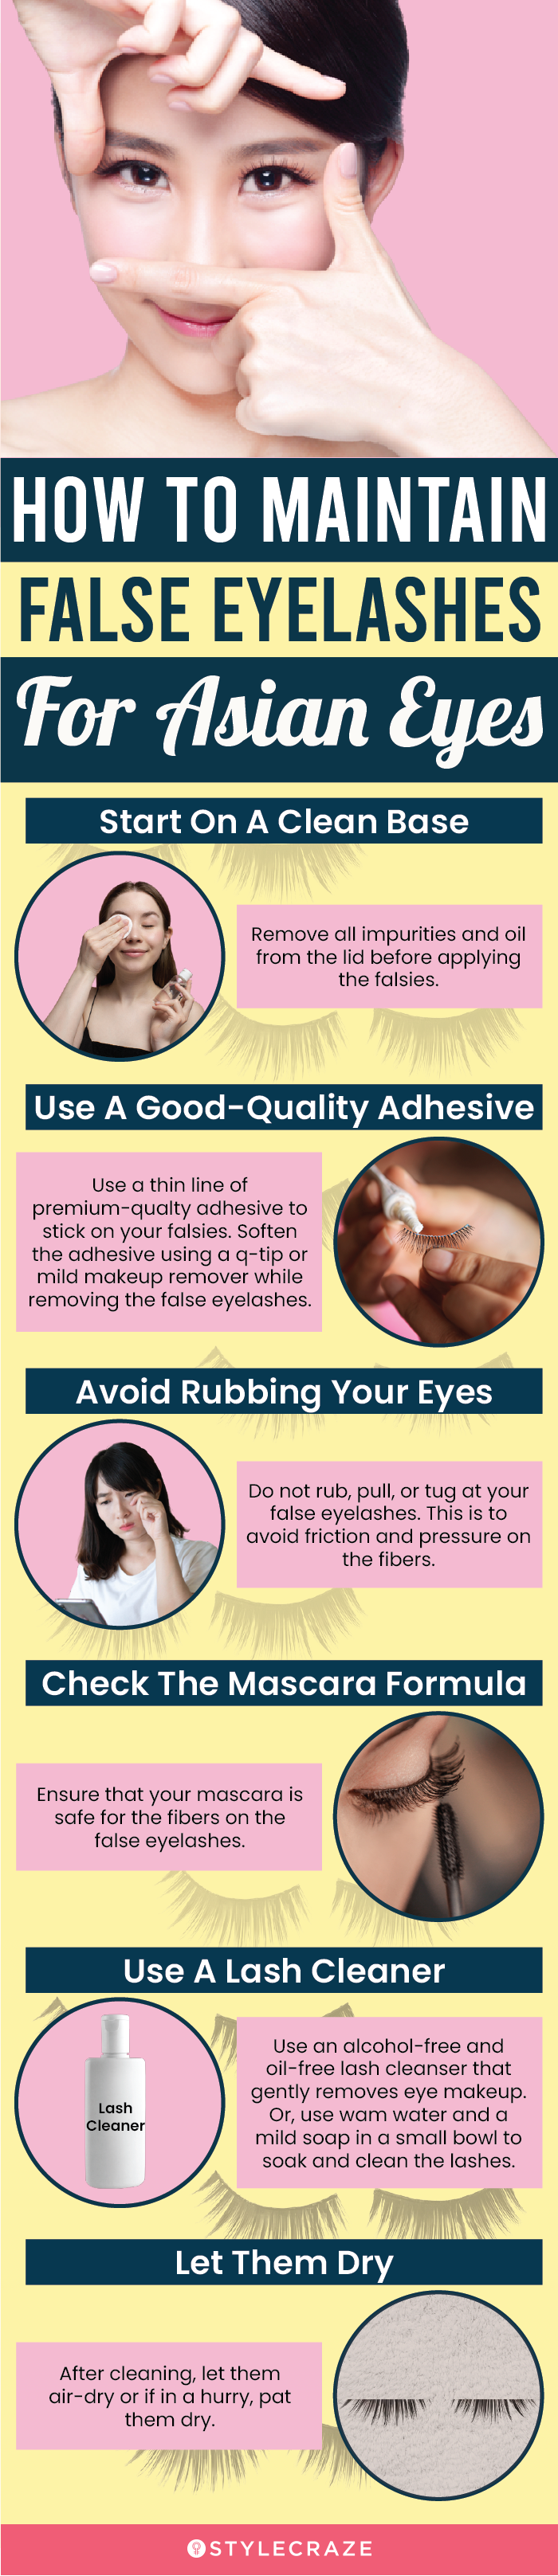 How To Maintain False Eyelashes For Asian Eyes  [infographic]